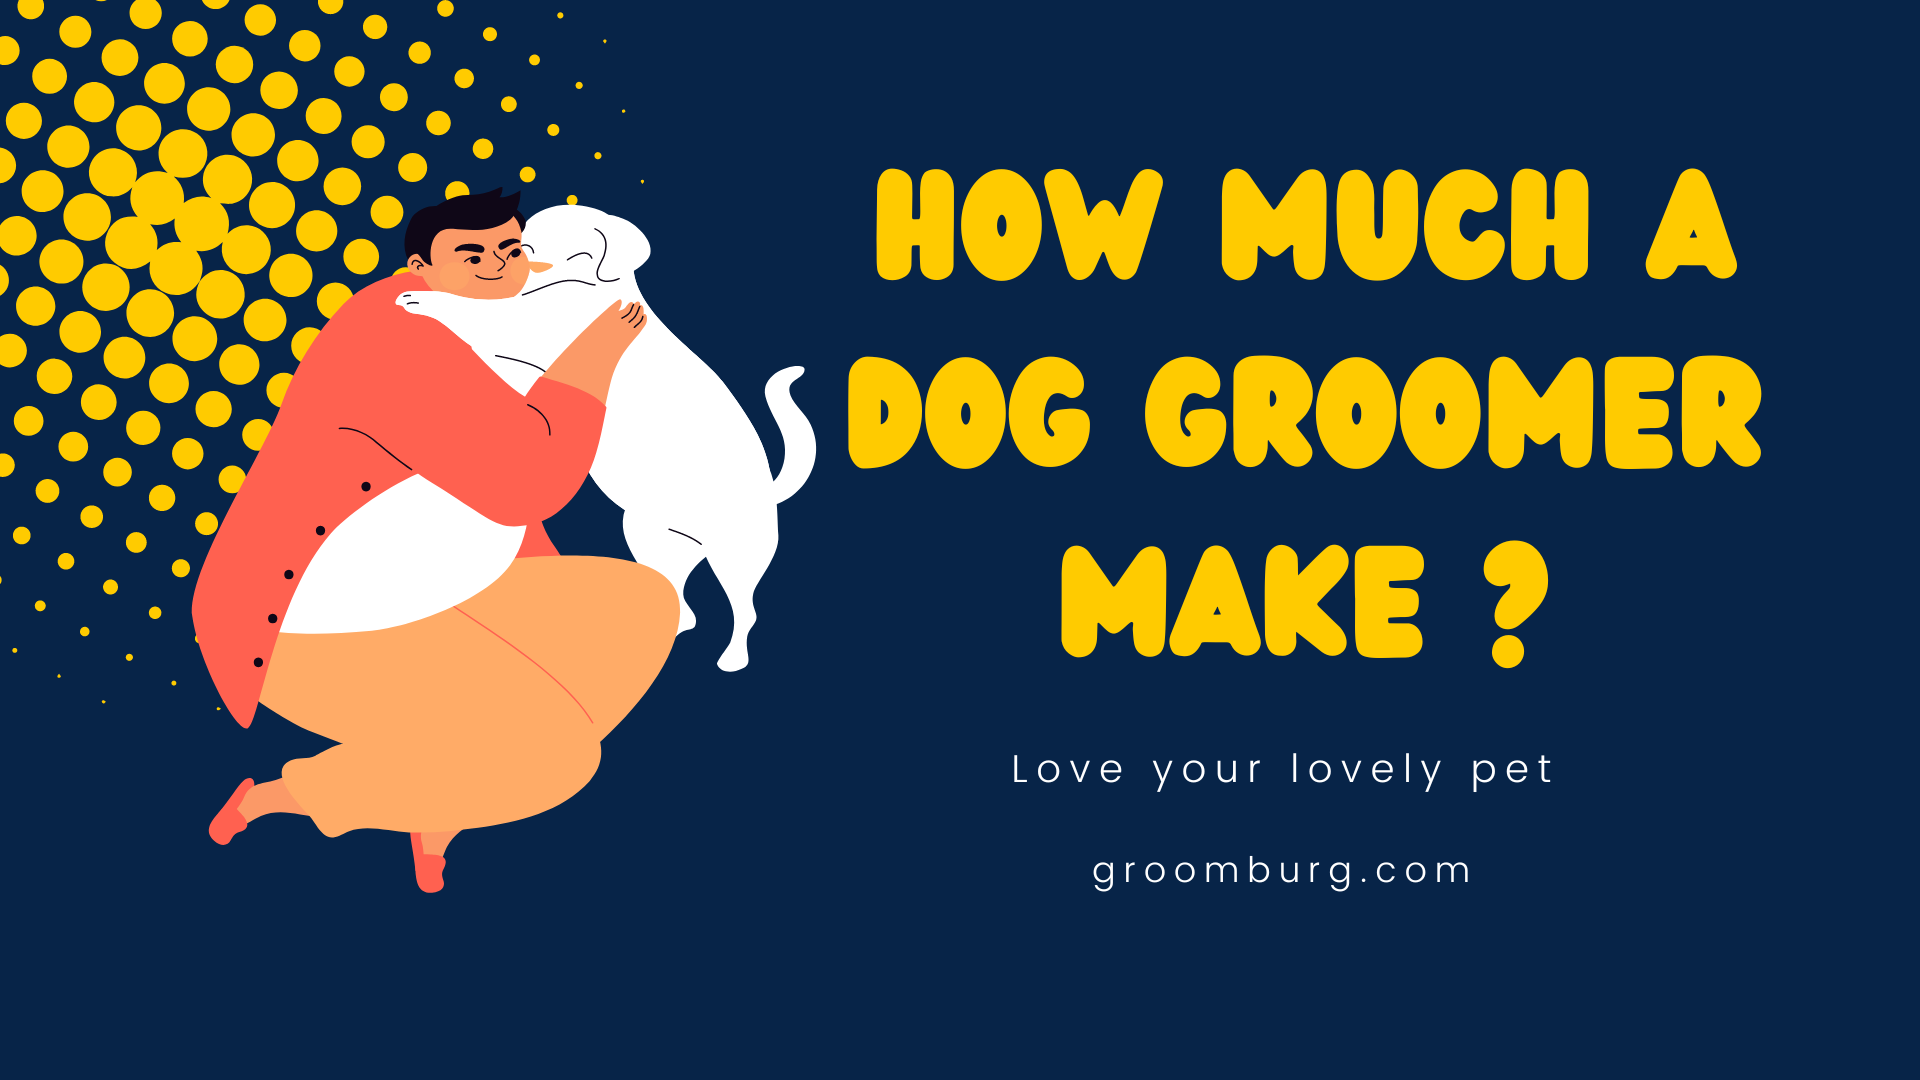 How Much a Dog Groomer Make